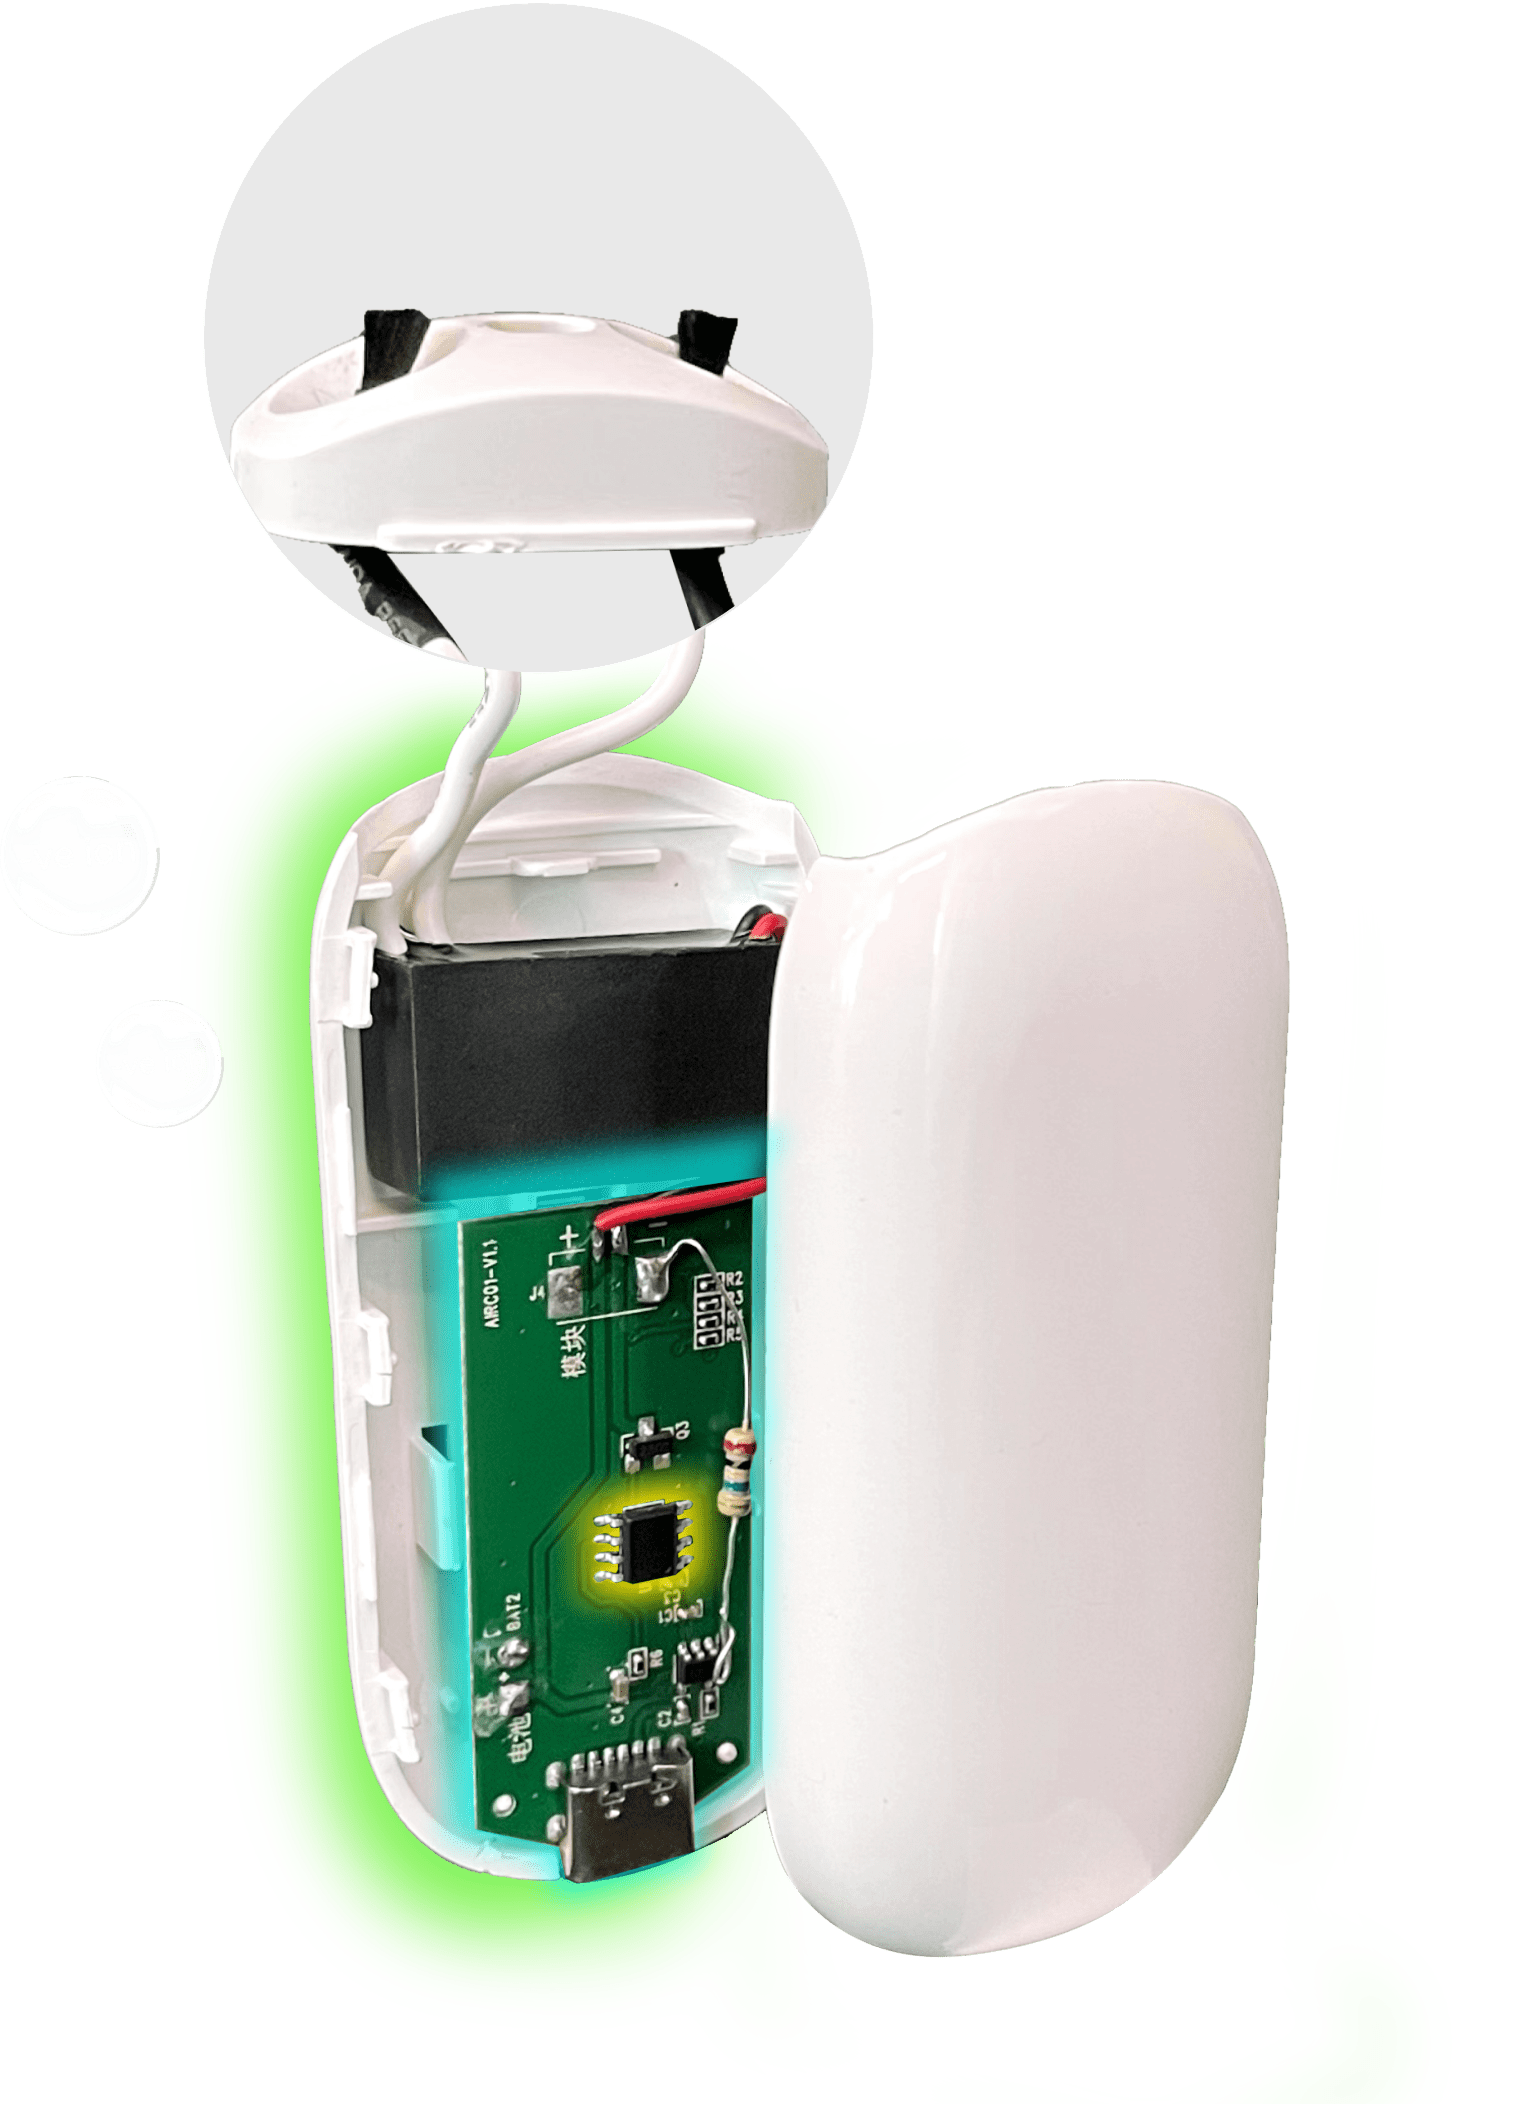 lonization technology of prana air purifier